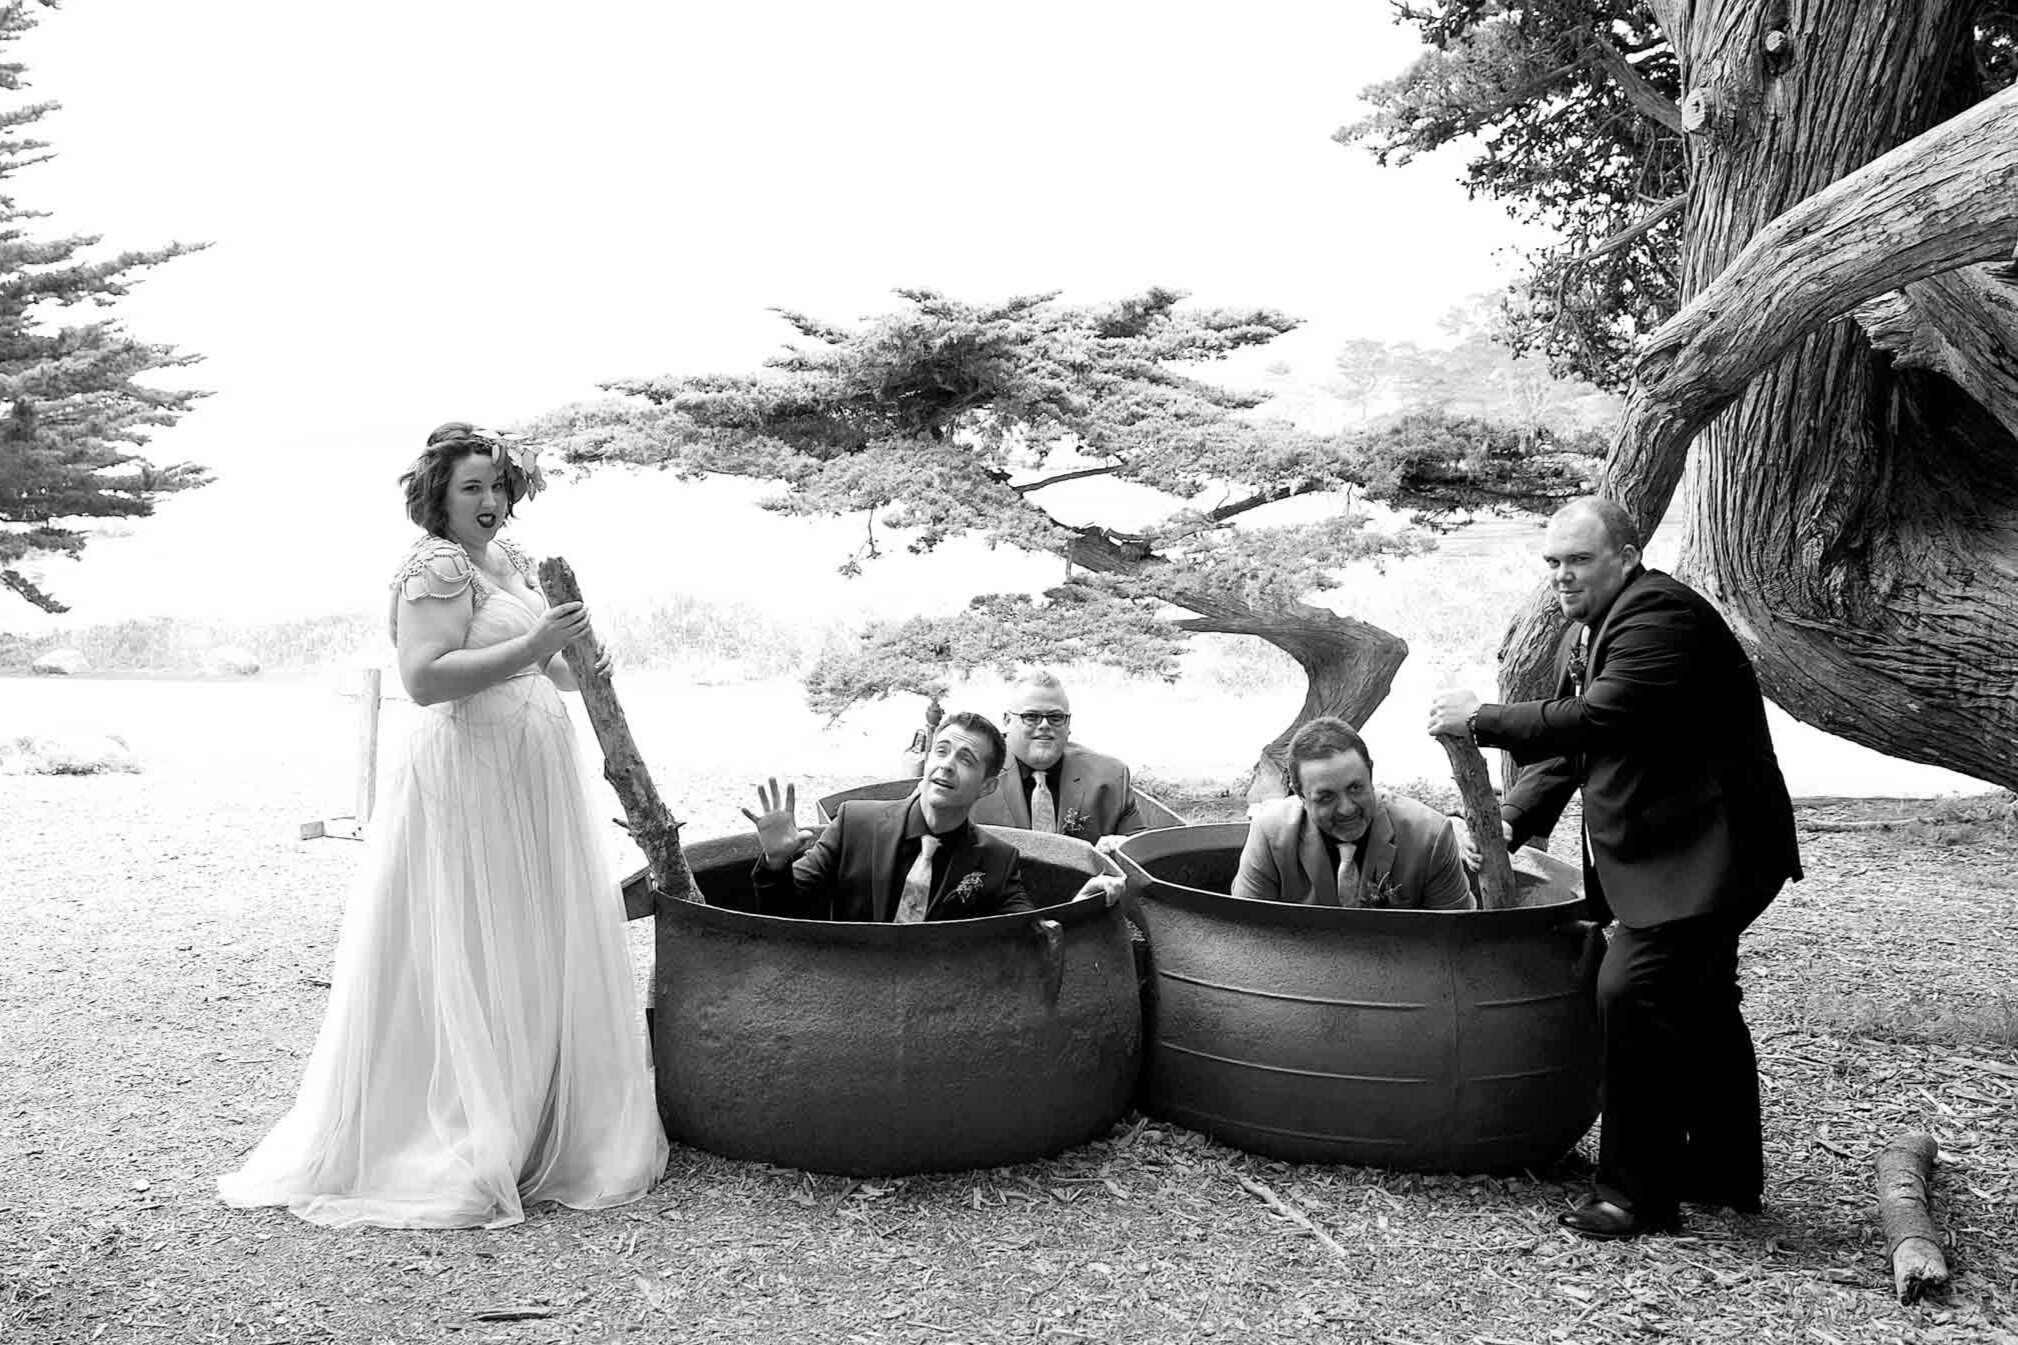 Jennydee+Photography+San+Francisco+wedding+photography-131.jpg